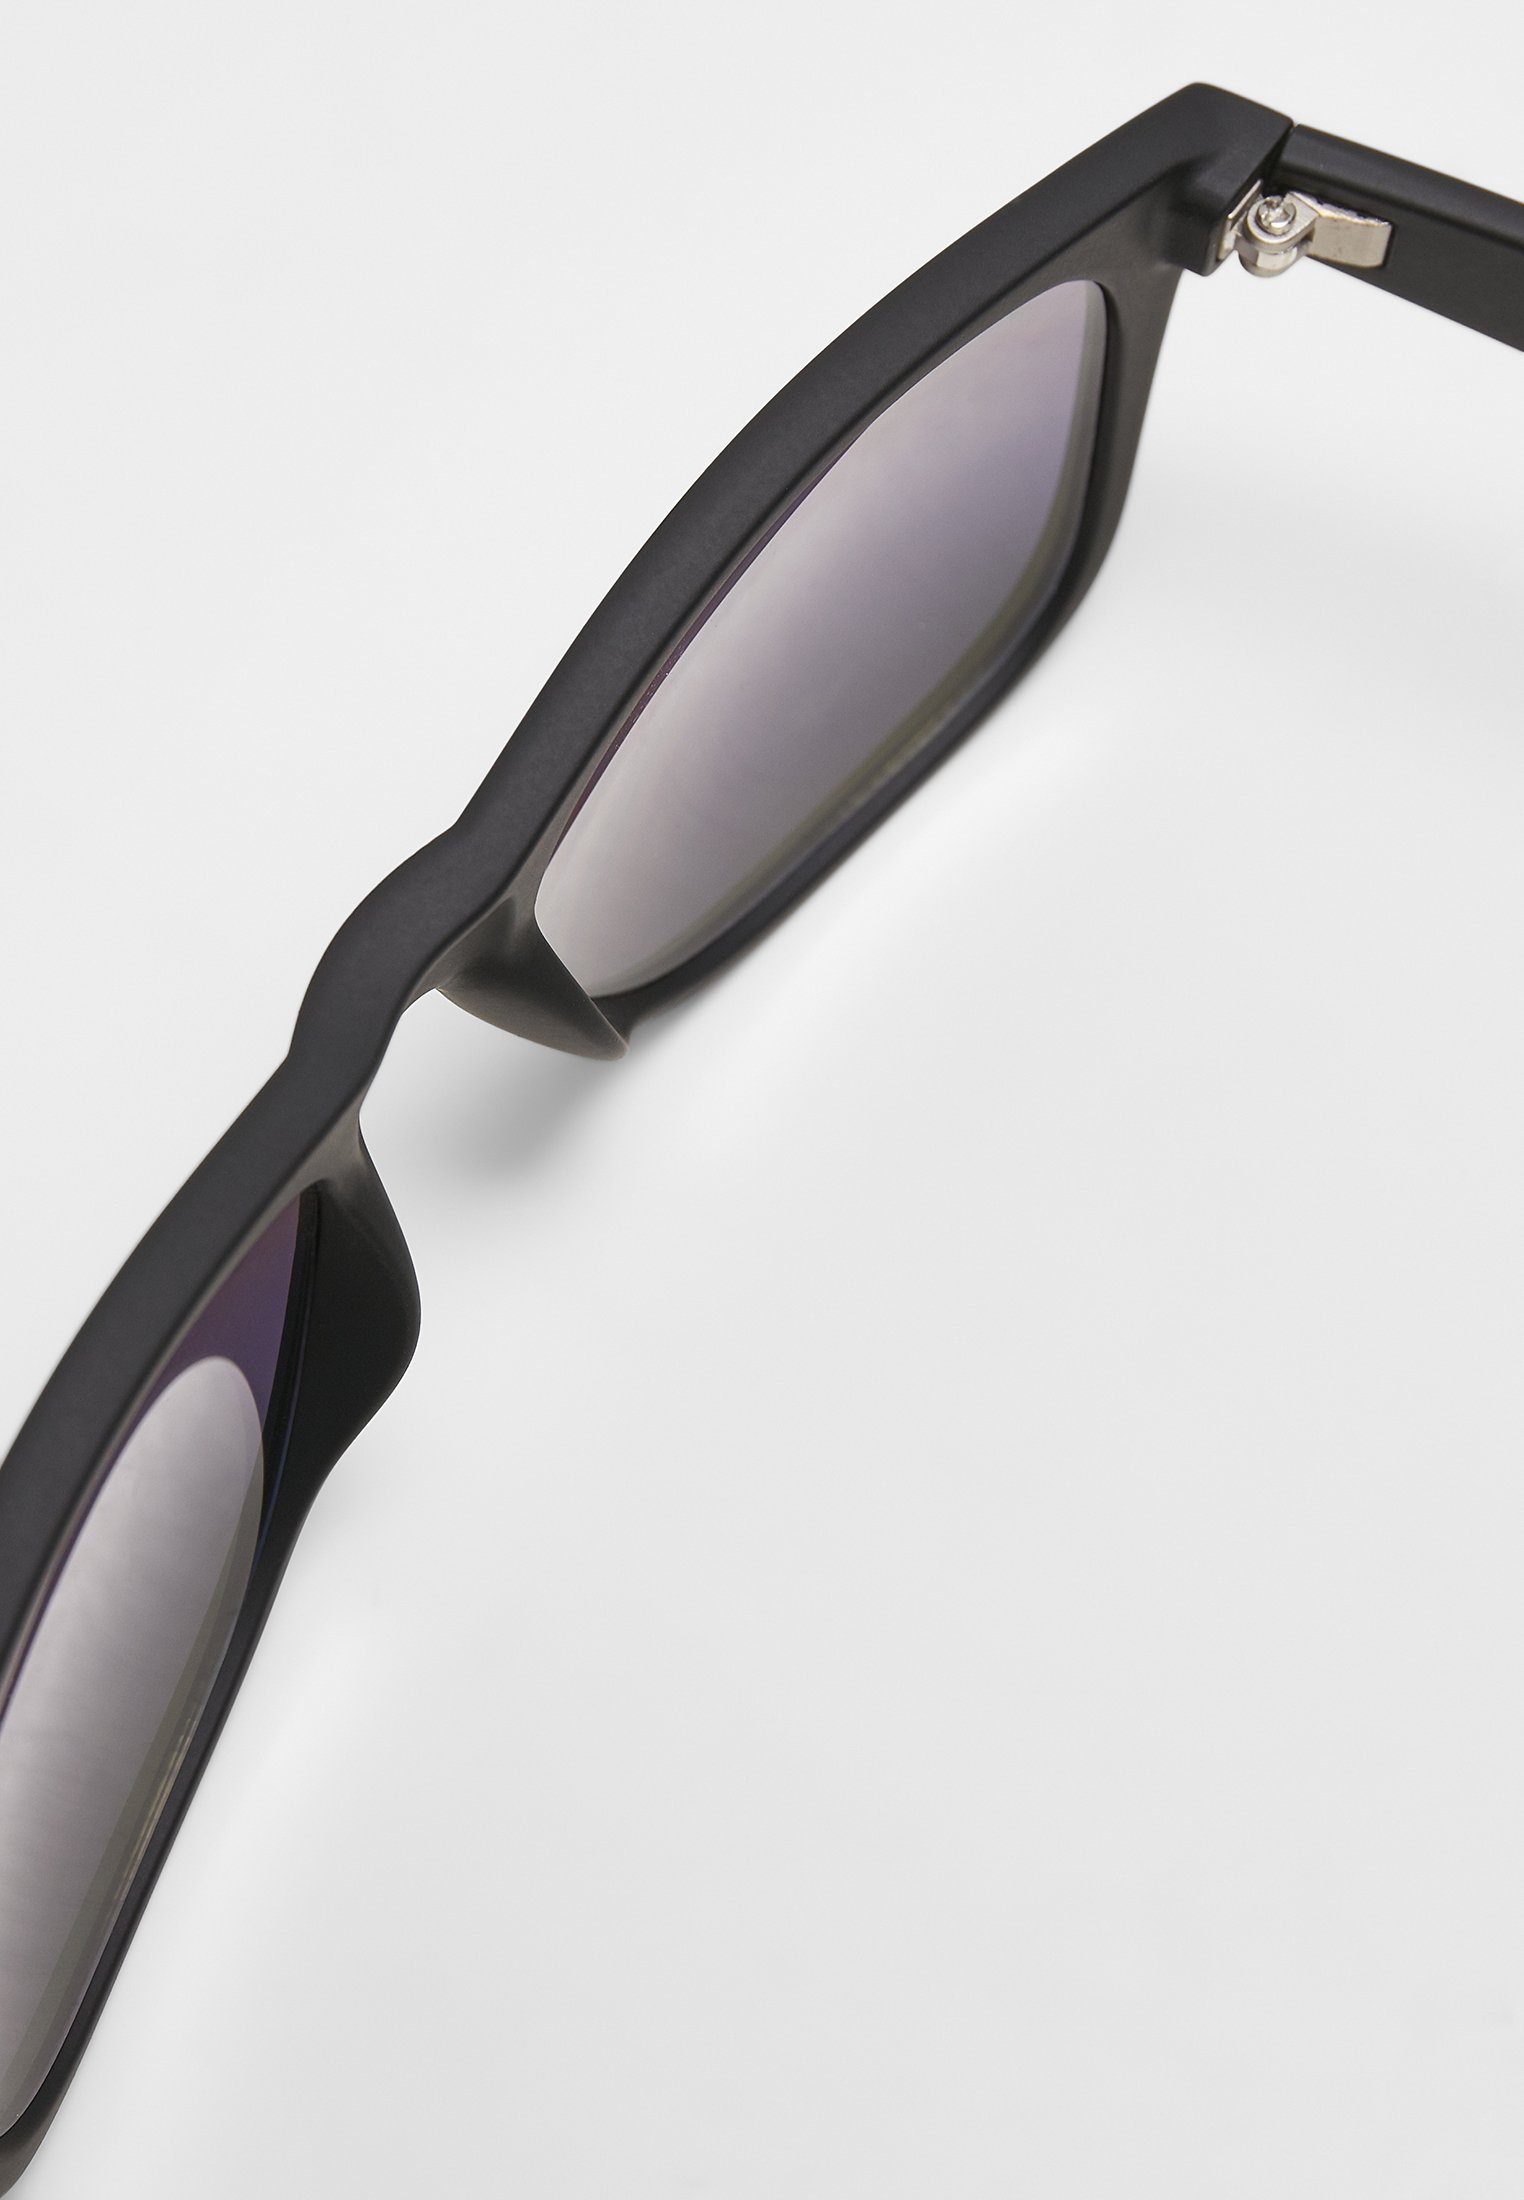 URBAN CLASSICS Sonnenbrille Accessoires Sunglasses Mirror UC black/purple Likoma